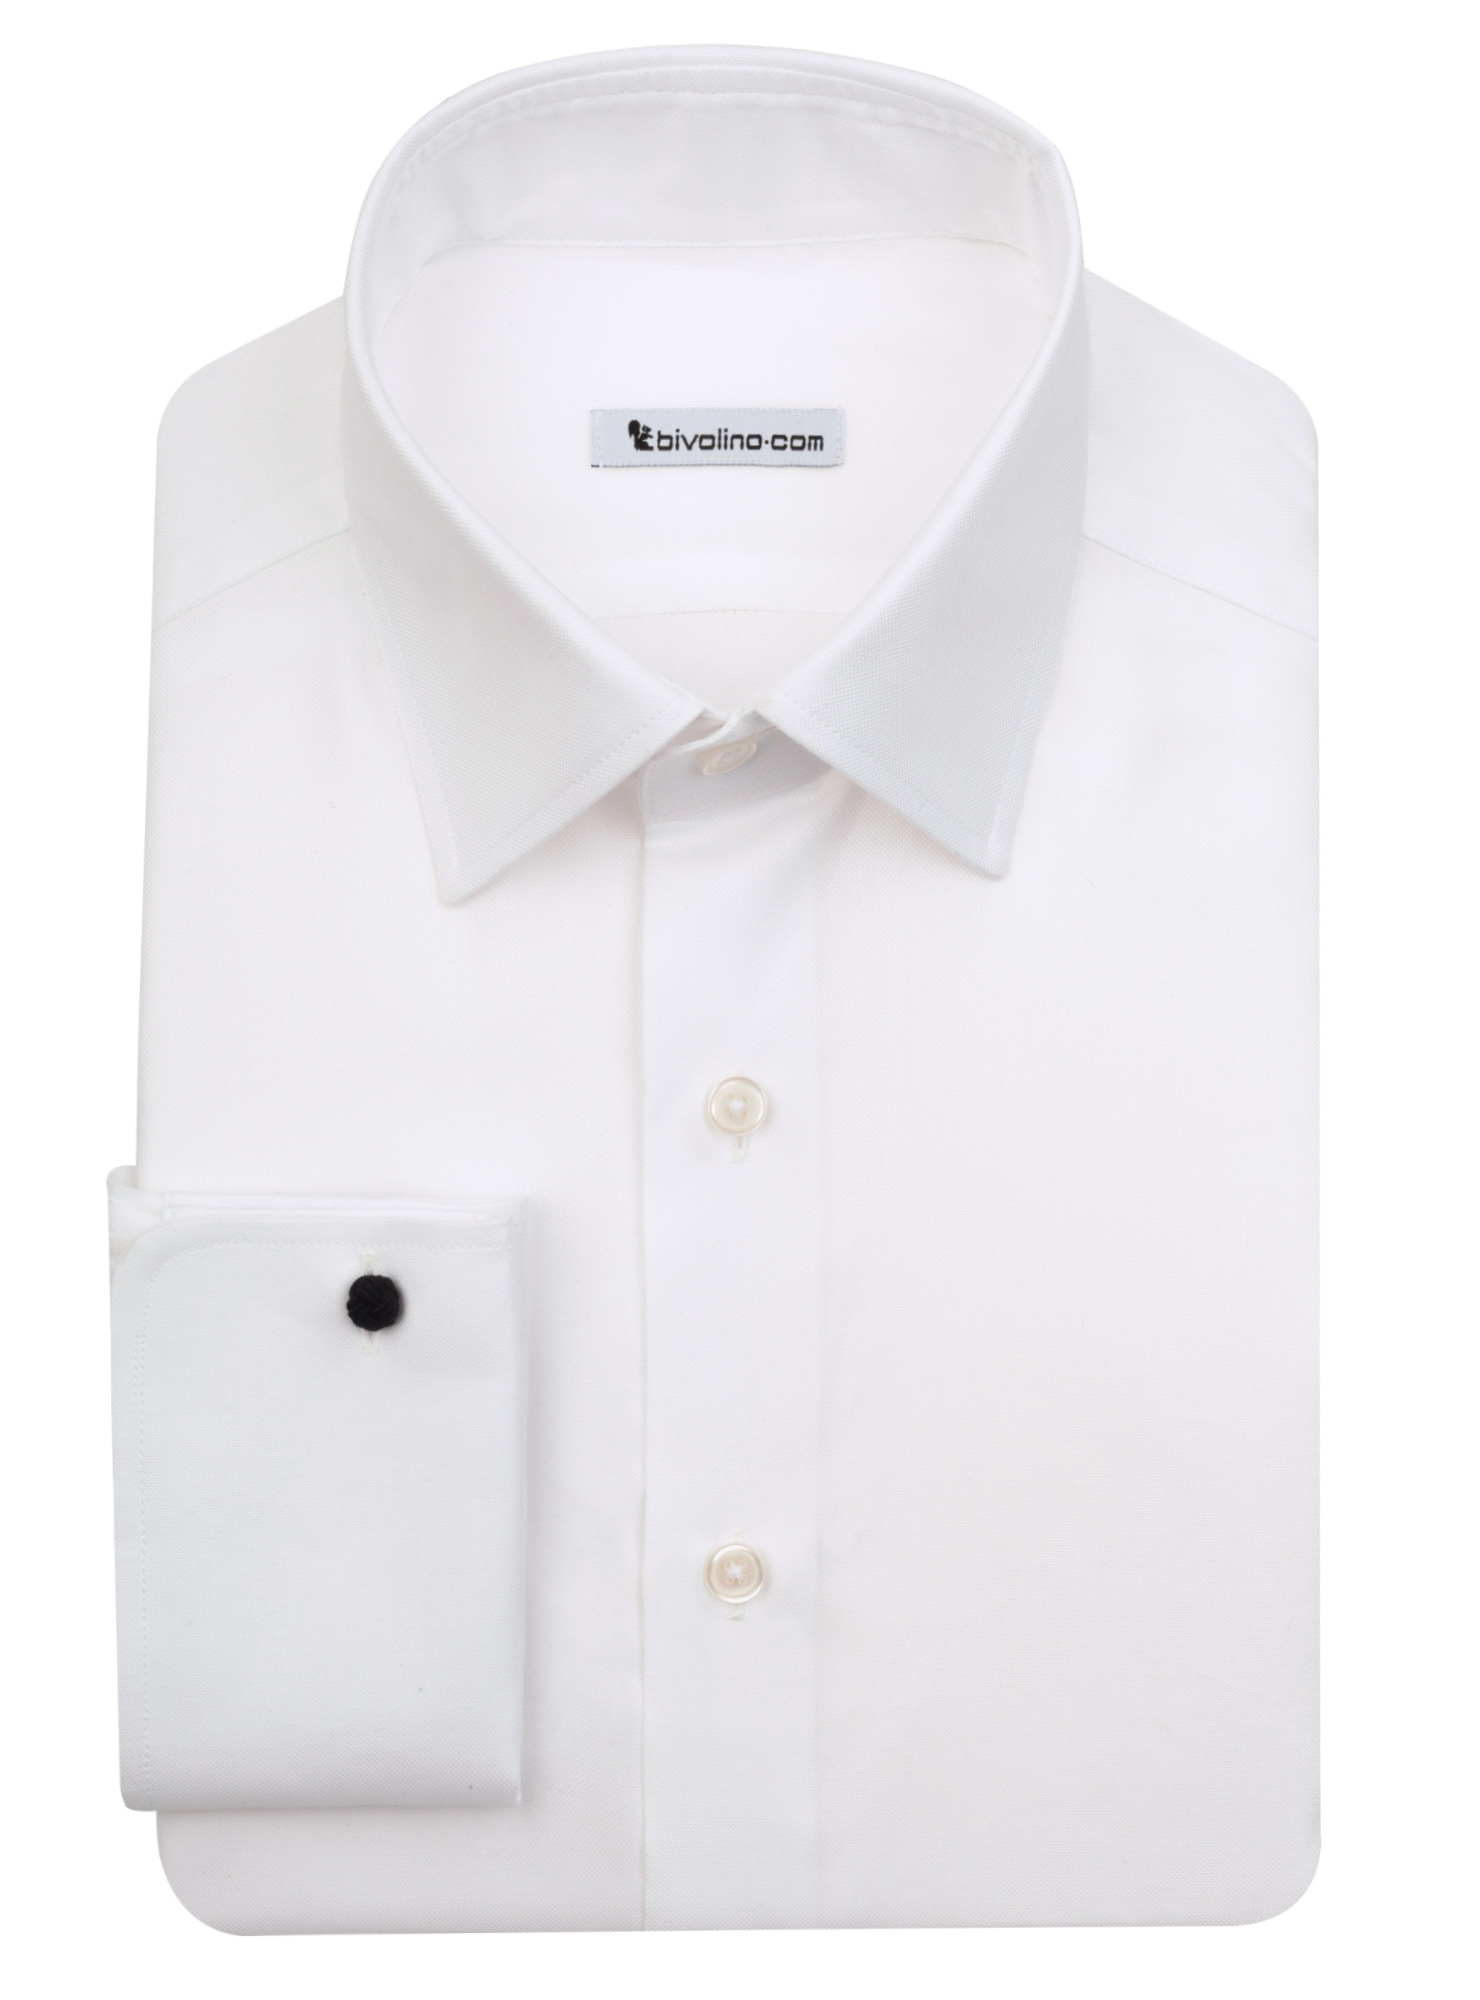 TRENTO - chemise royal oxford blanc coton - LABA 2 